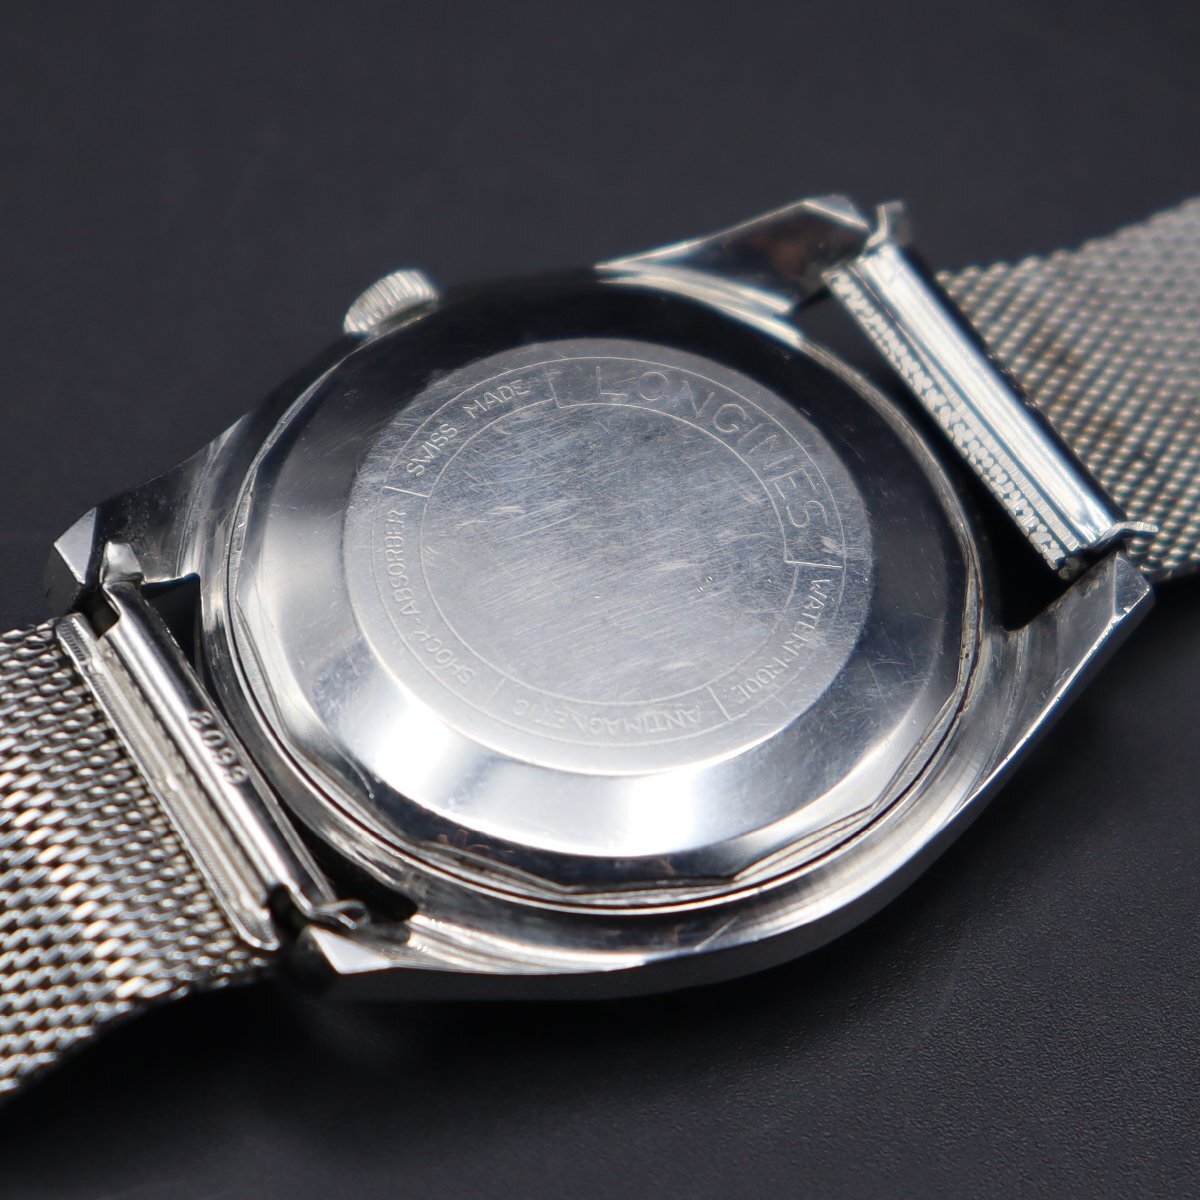 LONGINES CONQUEST ロンジン コンクエスト 自動巻き シルバー文字盤 1960年代 デイト スイス製 純正バックル 保/保証書ケース メンズ腕時計